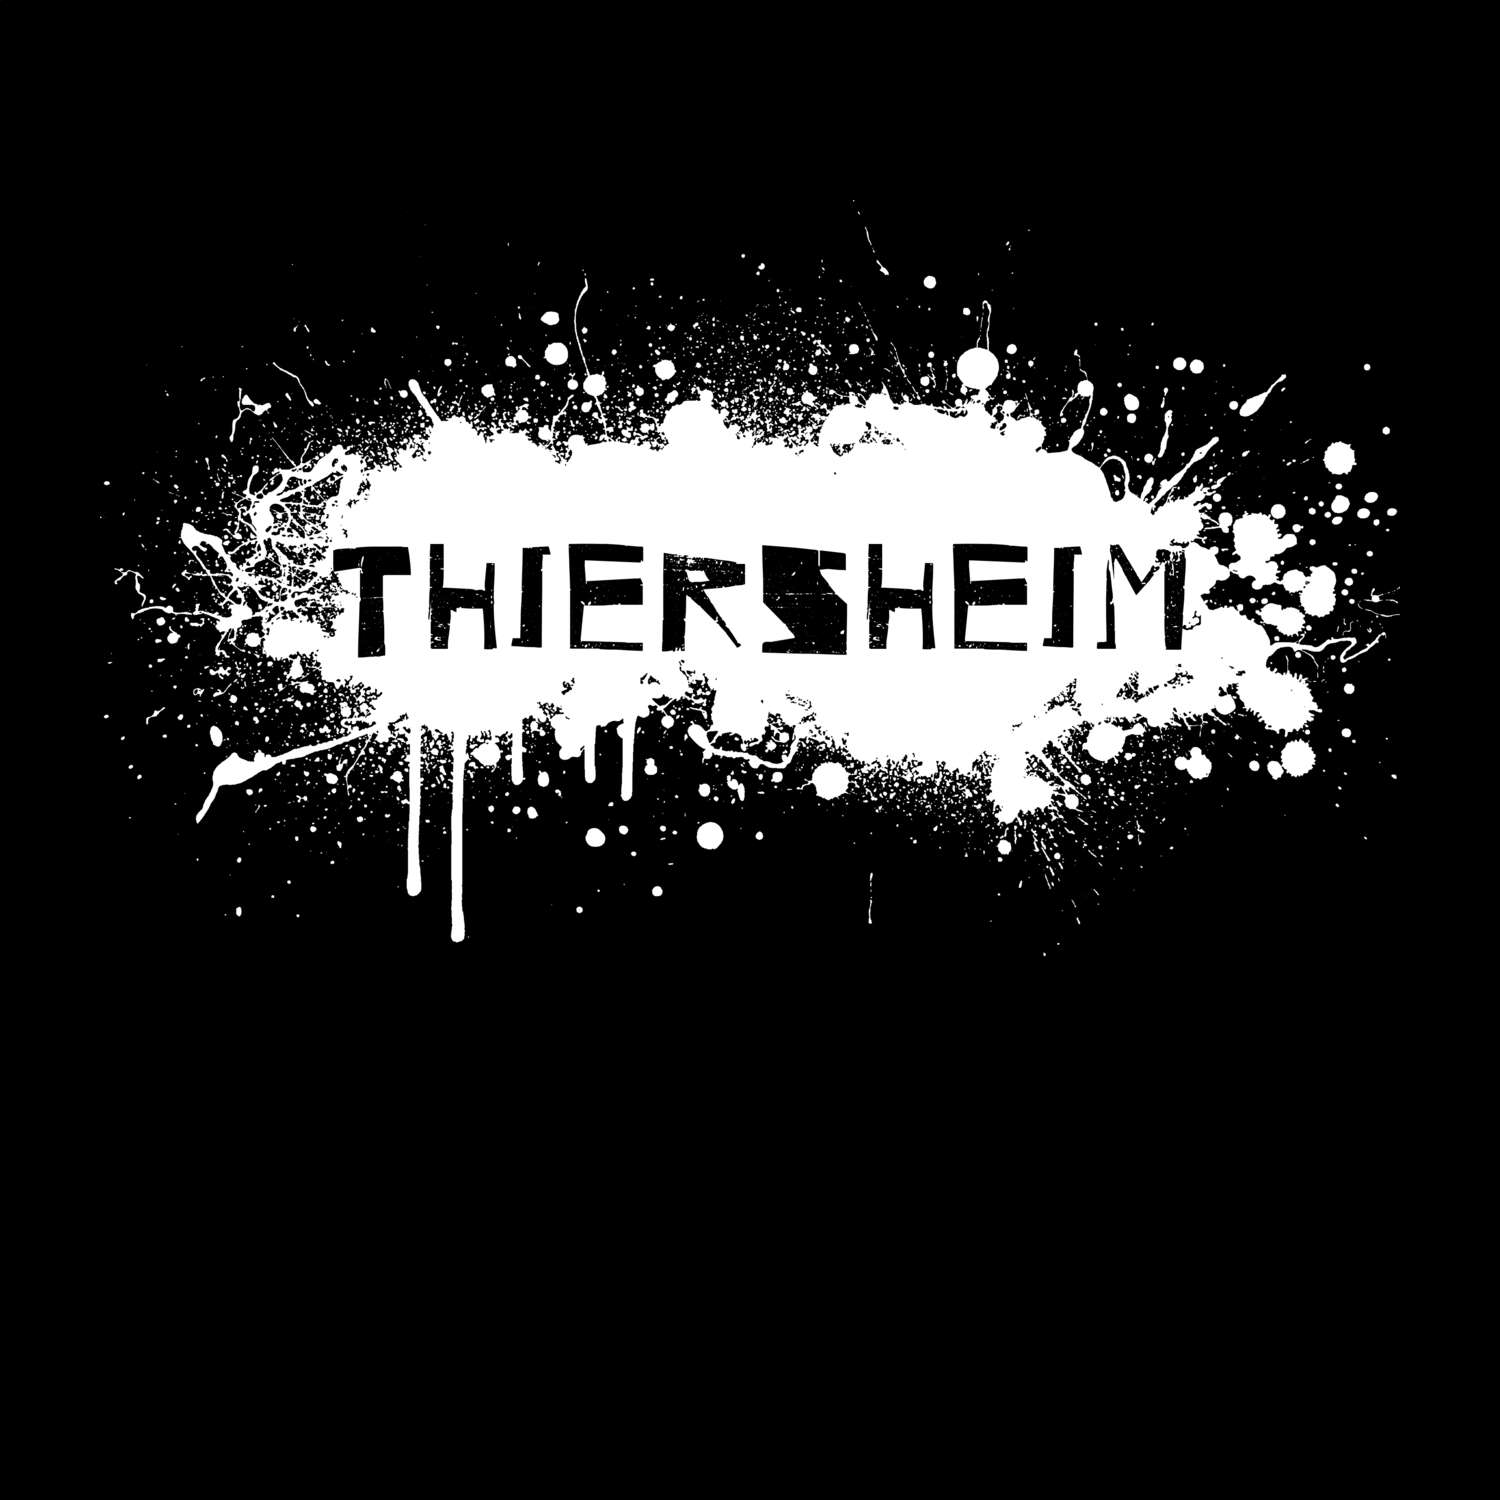 Thiersheim T-Shirt »Paint Splash Punk«